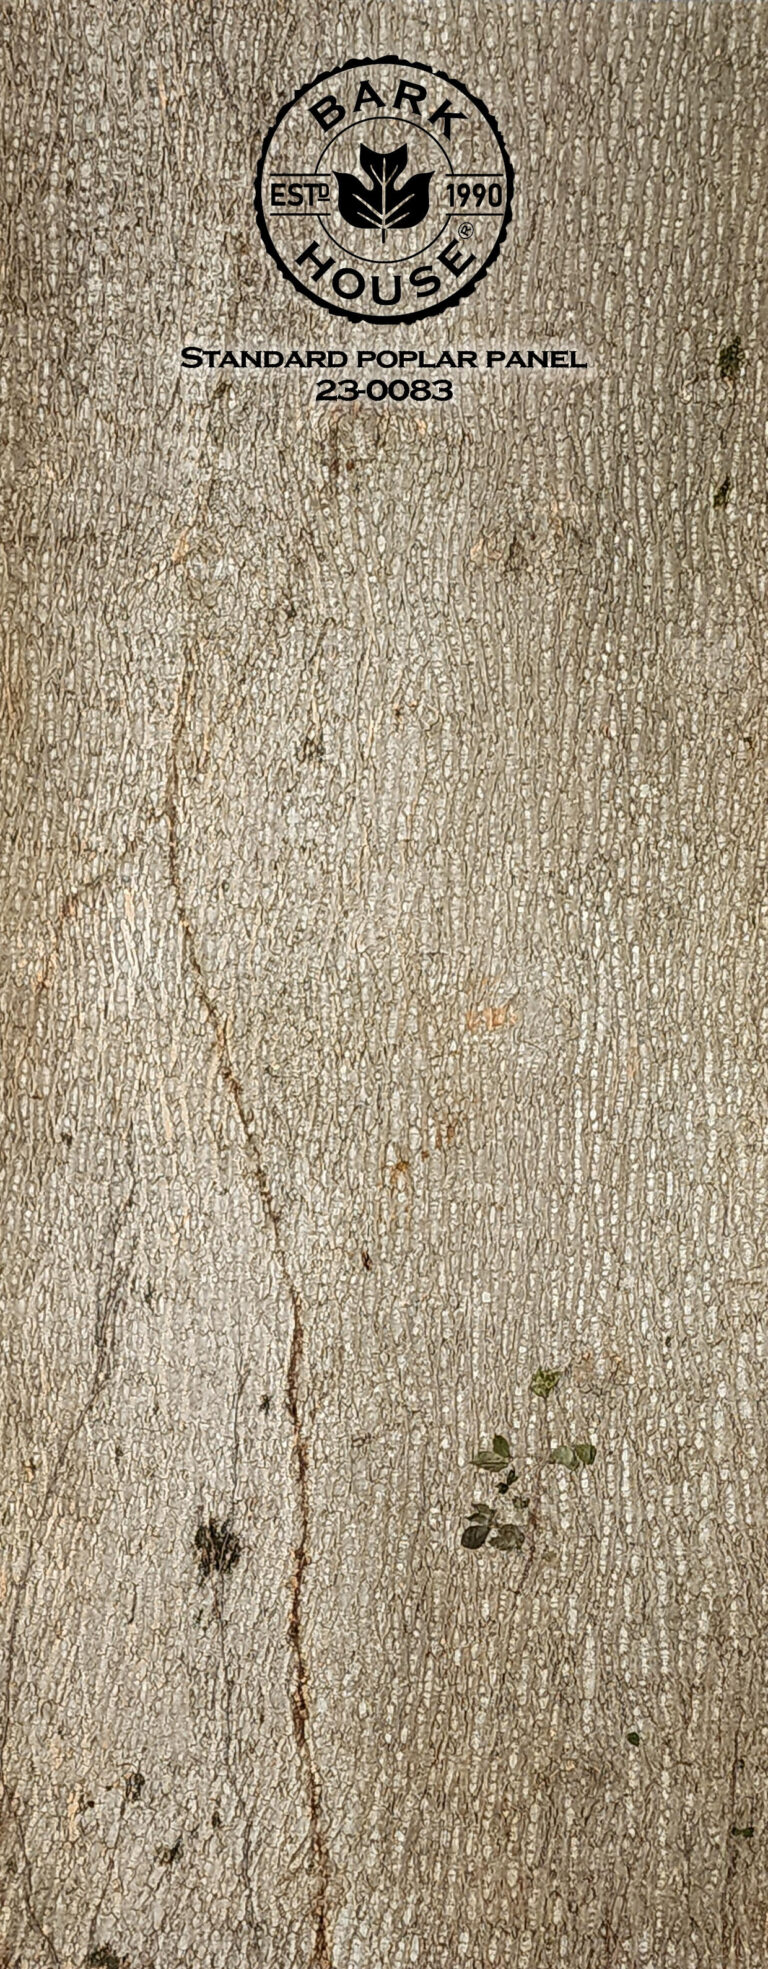 Bark House poplar bark panel SKU POPP-STD-23-0083